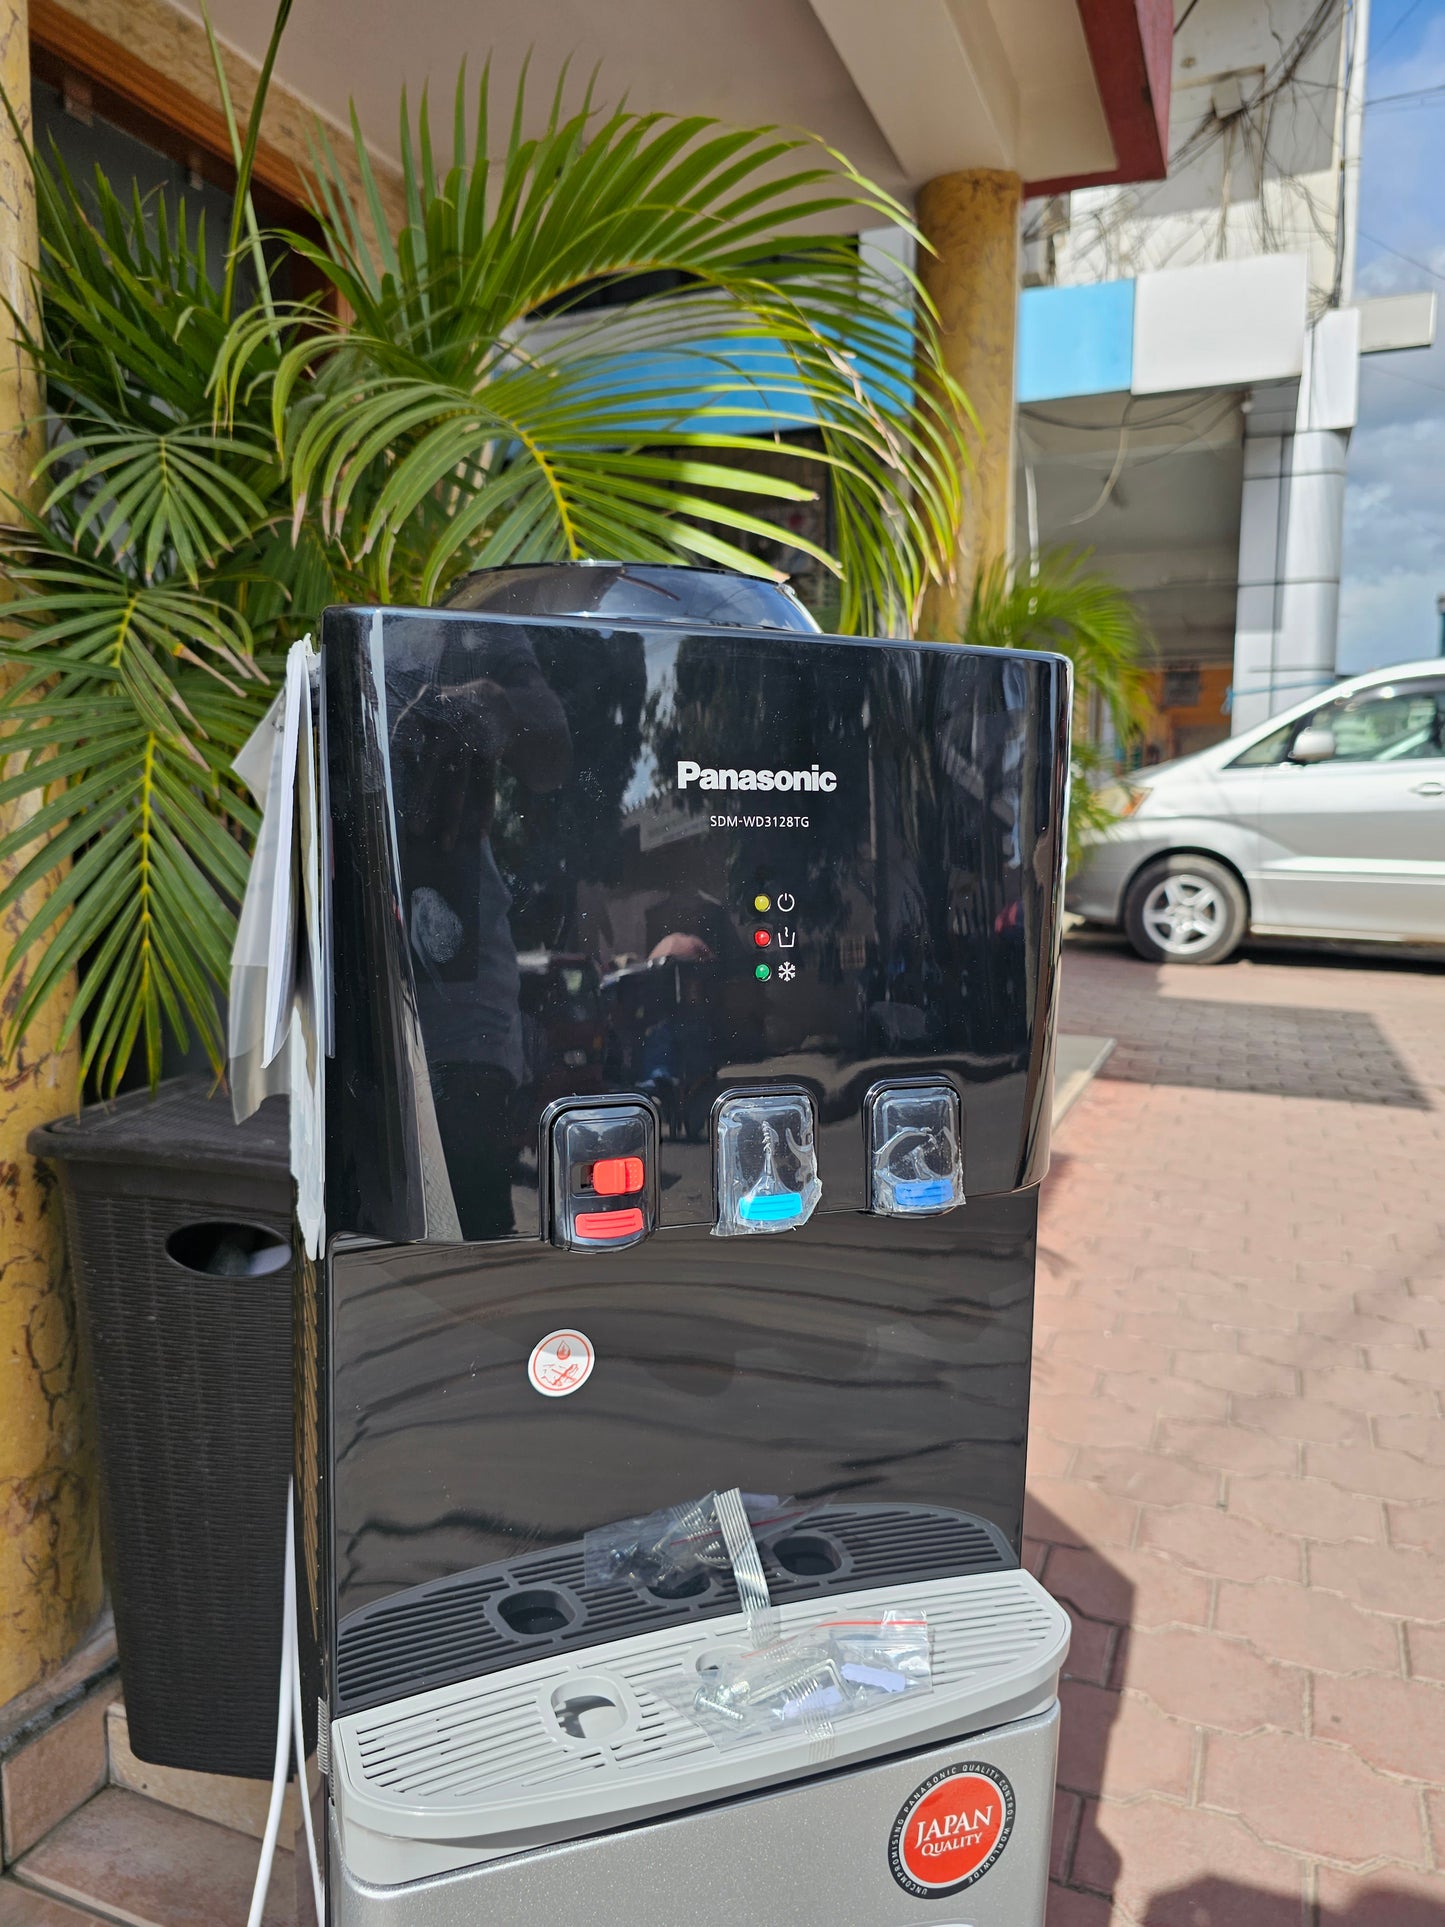 Panasonic water dispenser SDM-WD3128TG